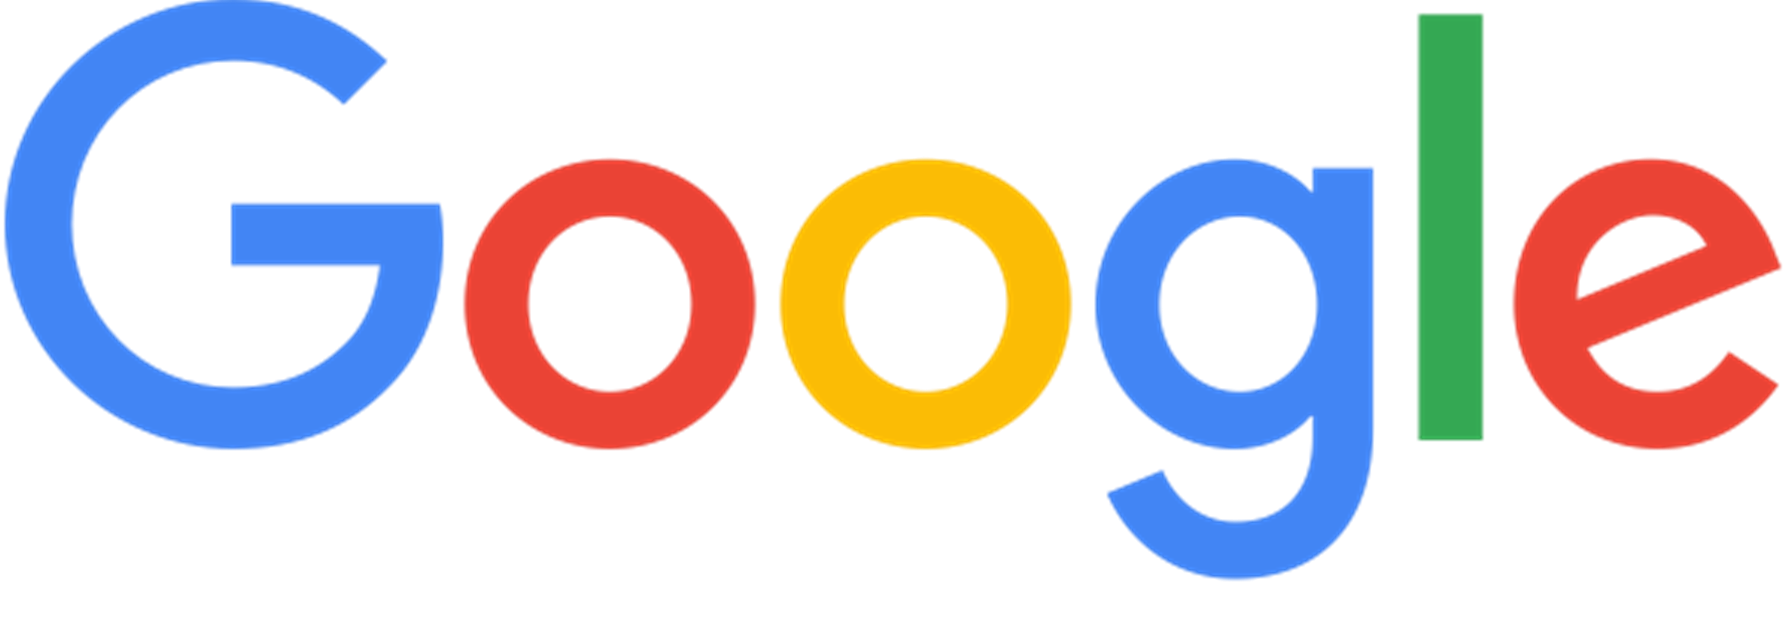 uusi Google-logo